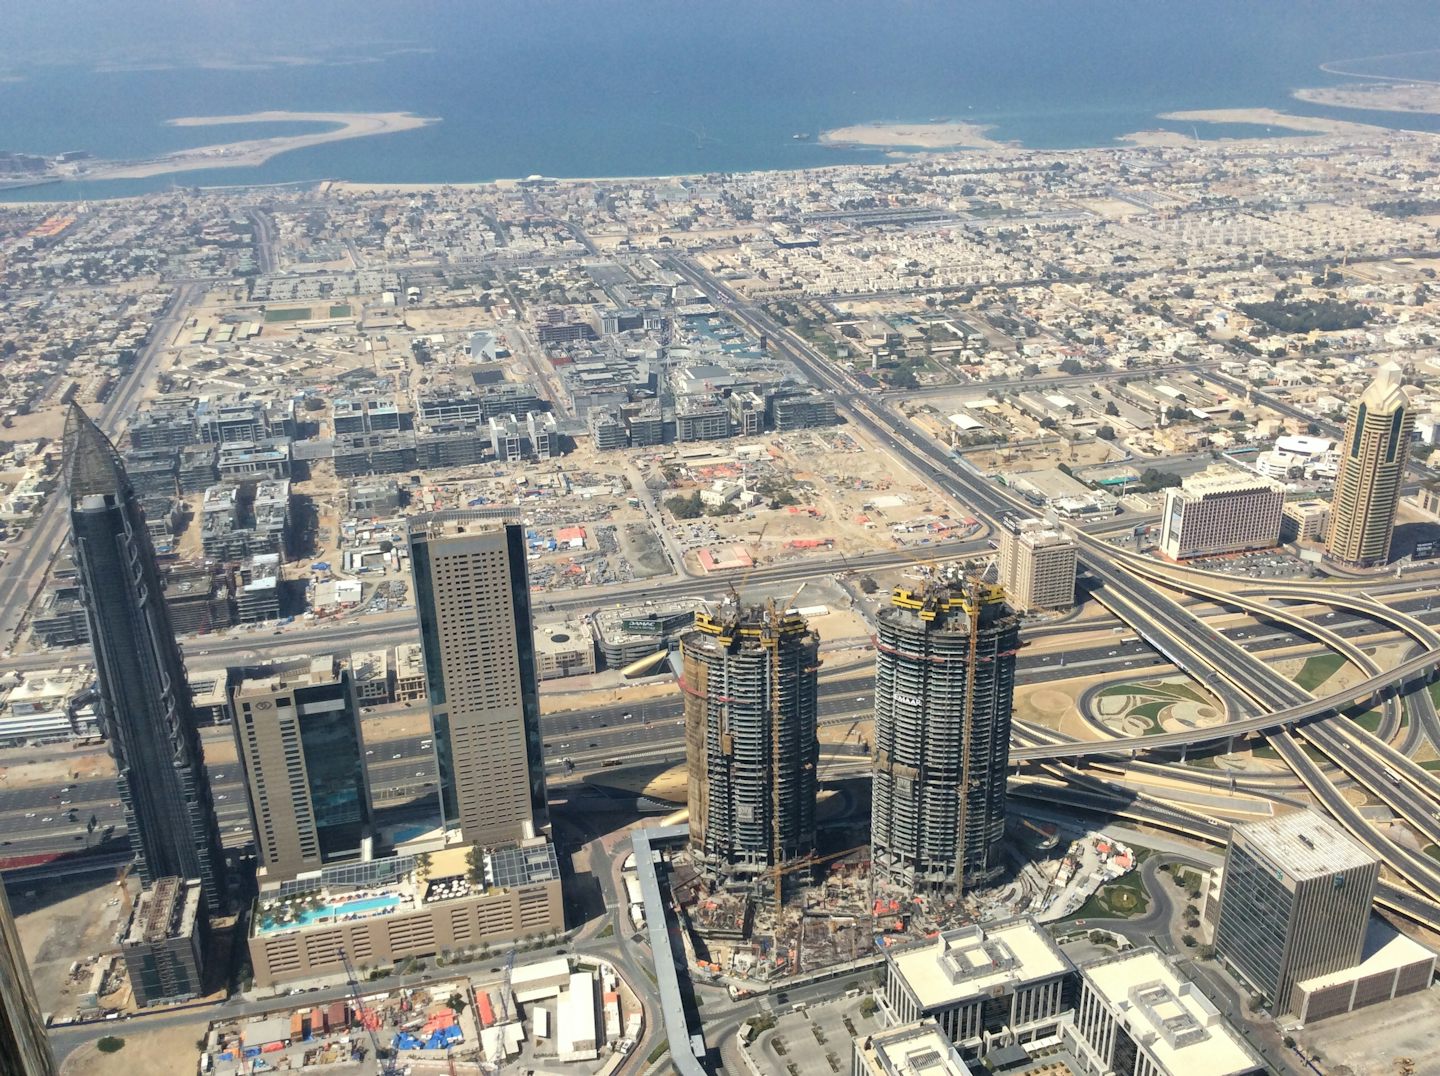 From the top of the Burj Kalifa in Dubai.